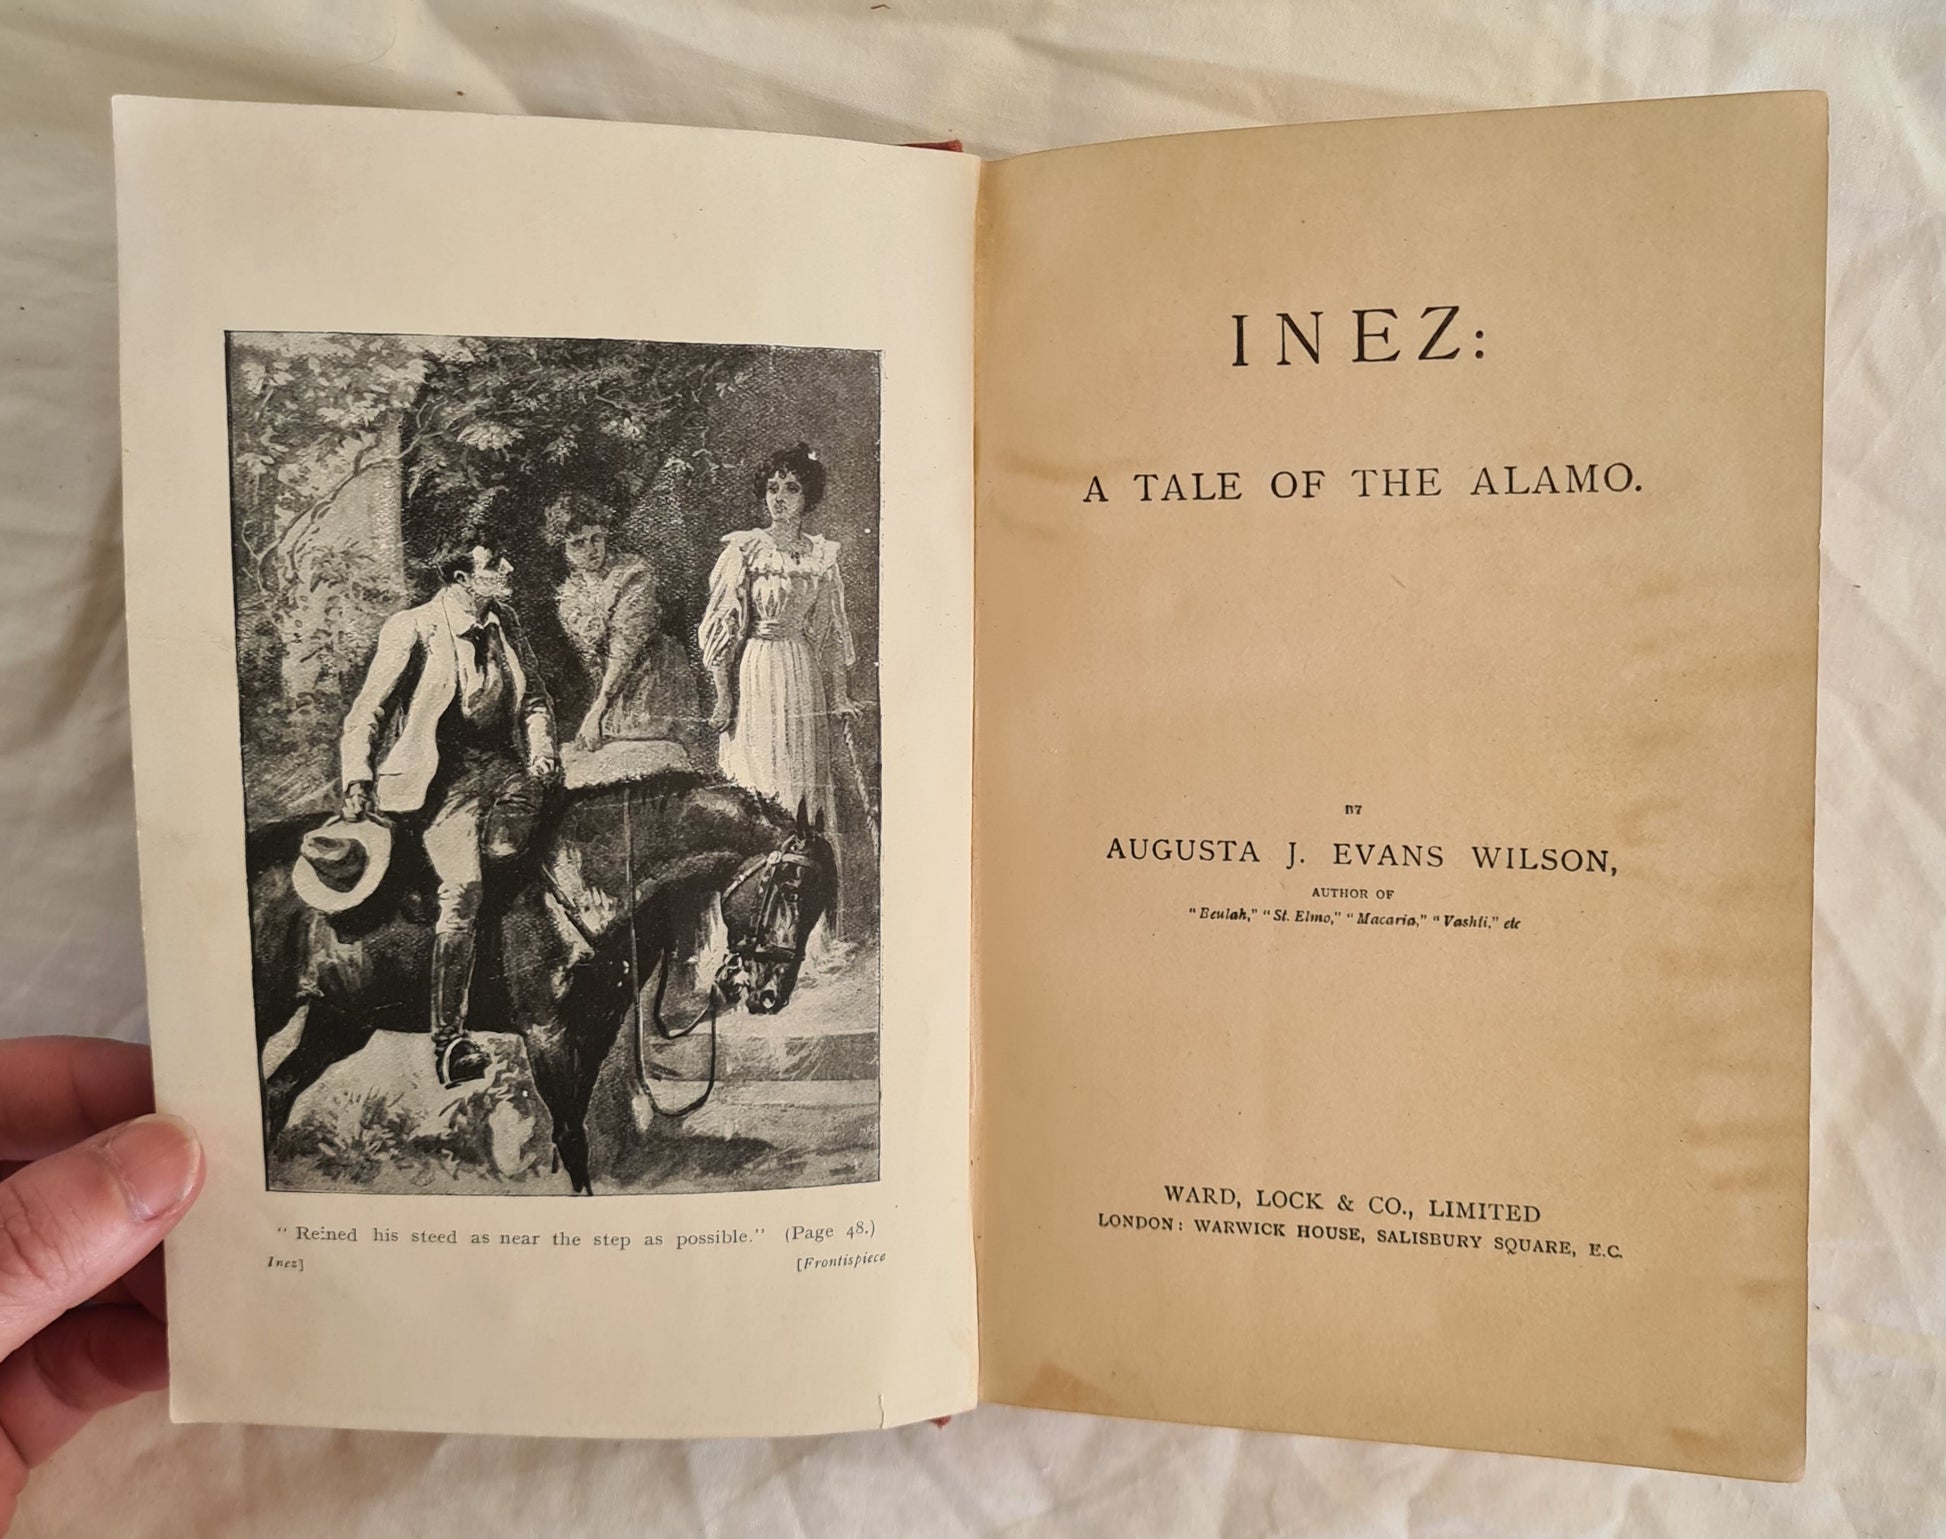 Inez: A Tale of the Alamo by Augusta J. Evans Wilson